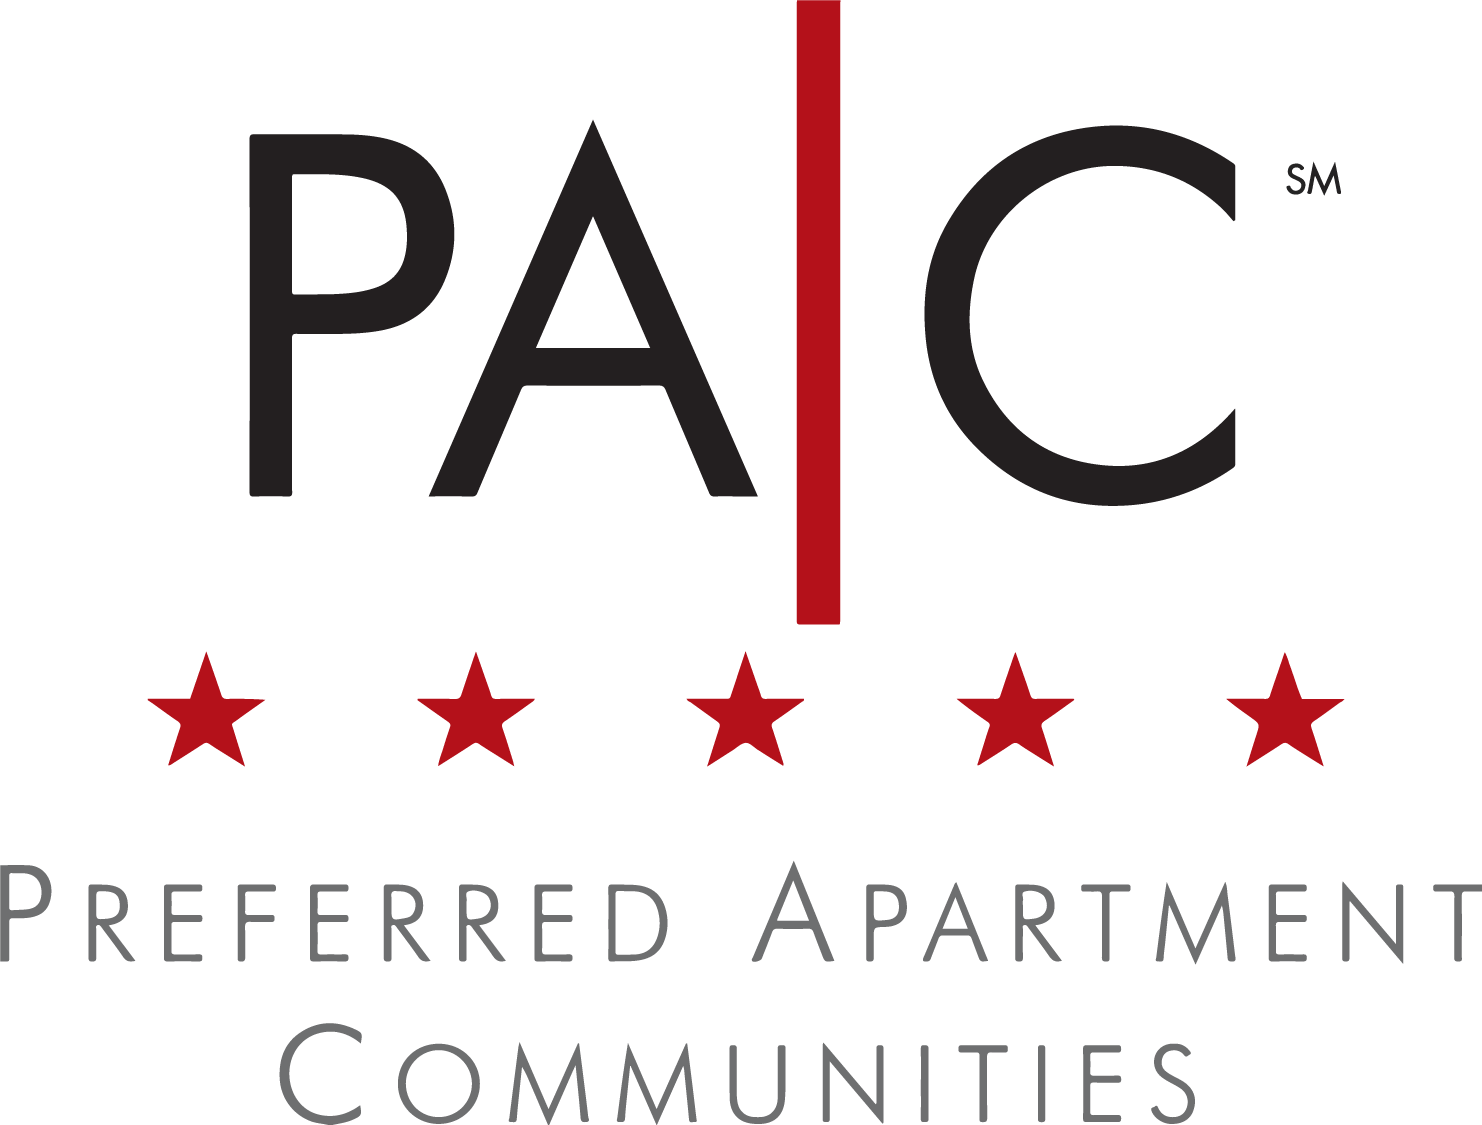 Preferred Apartment Communities logo large (transparent PNG)